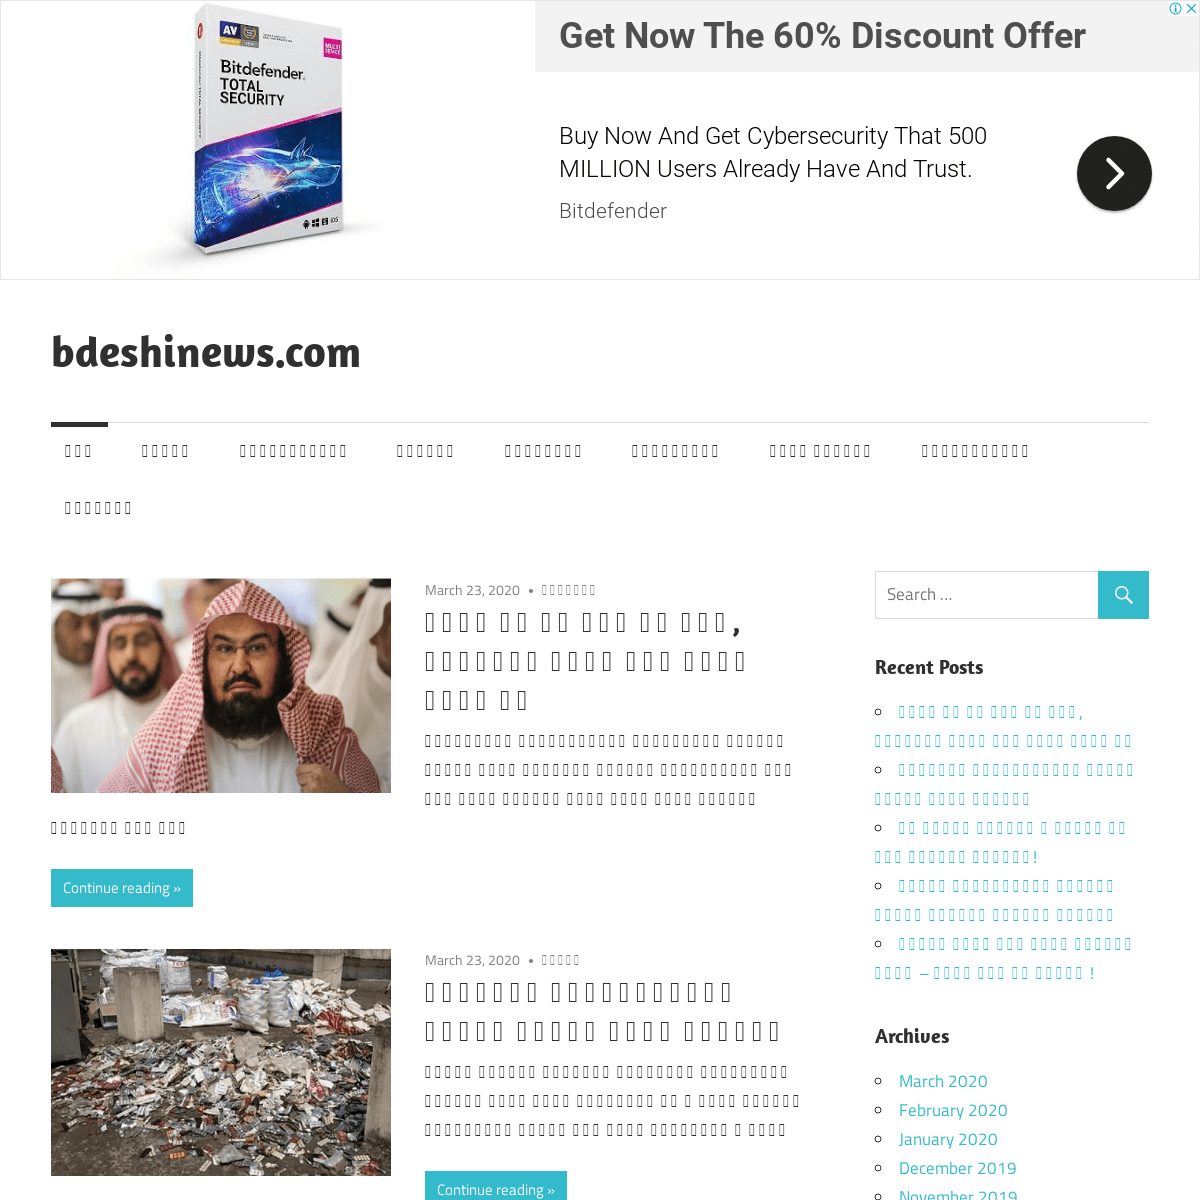 A complete backup of bdeshinews.com